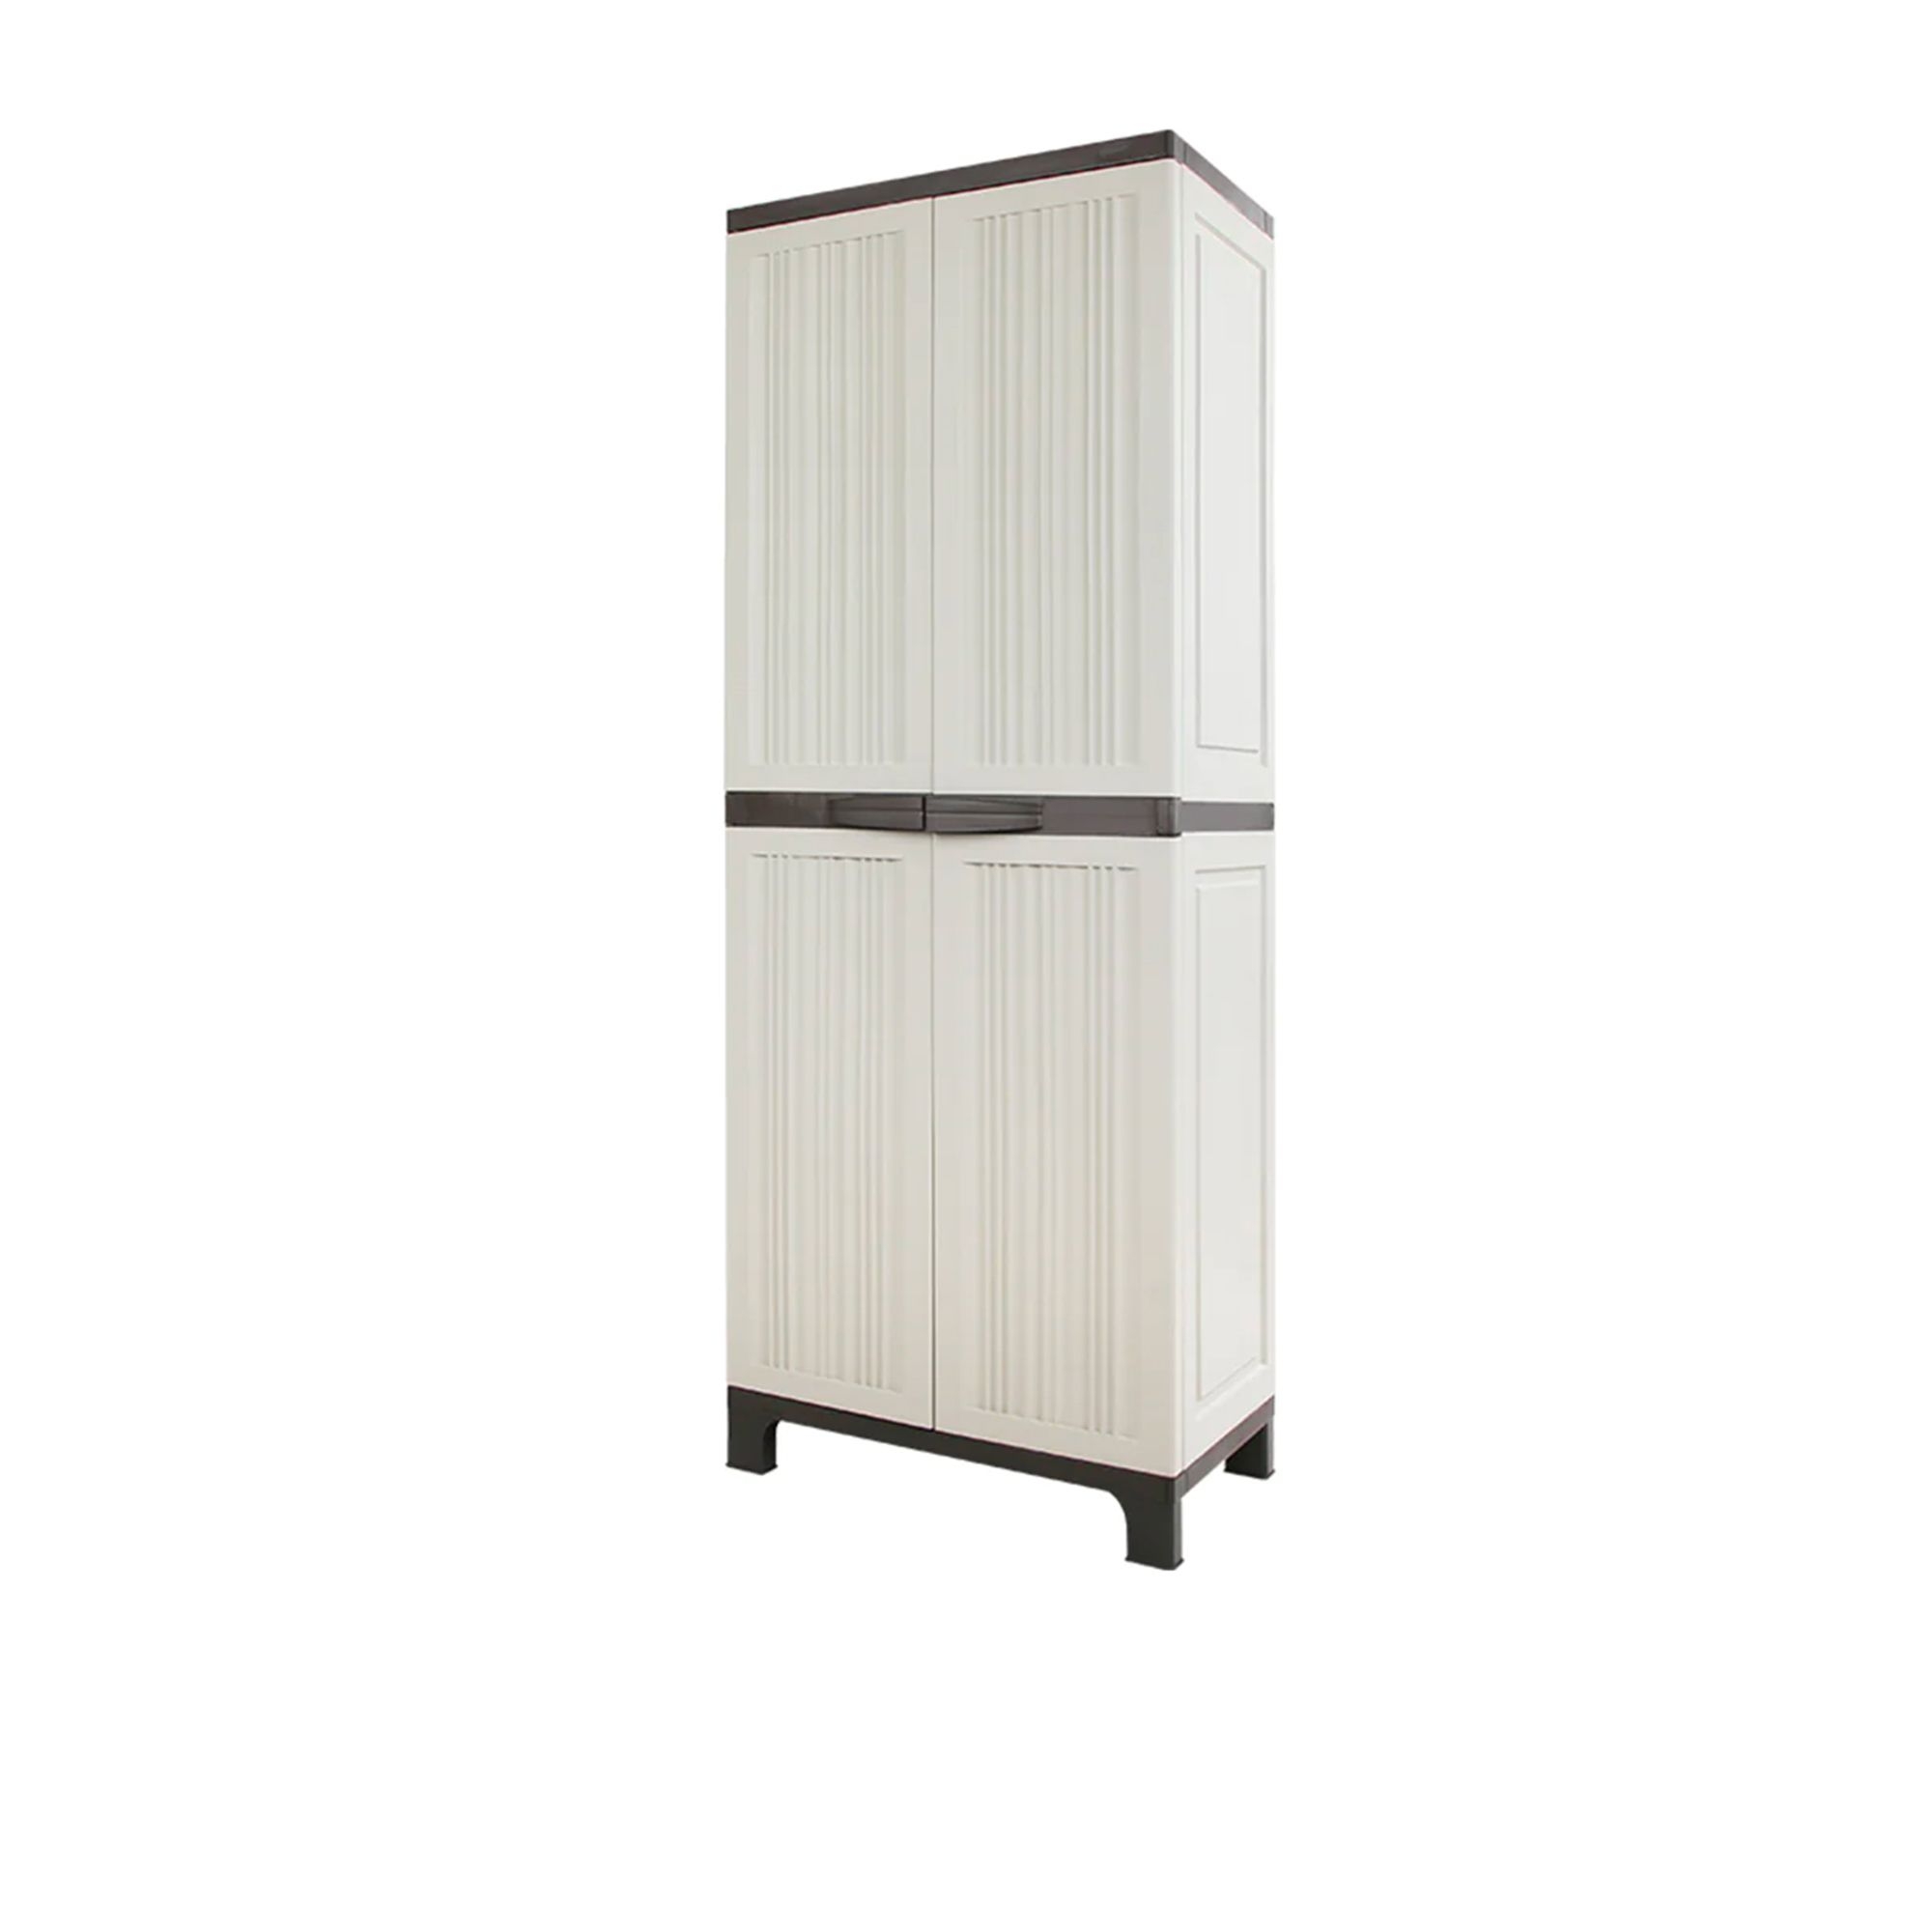 Gardeon Outdoor Storage Cabinet 173cm Image 1